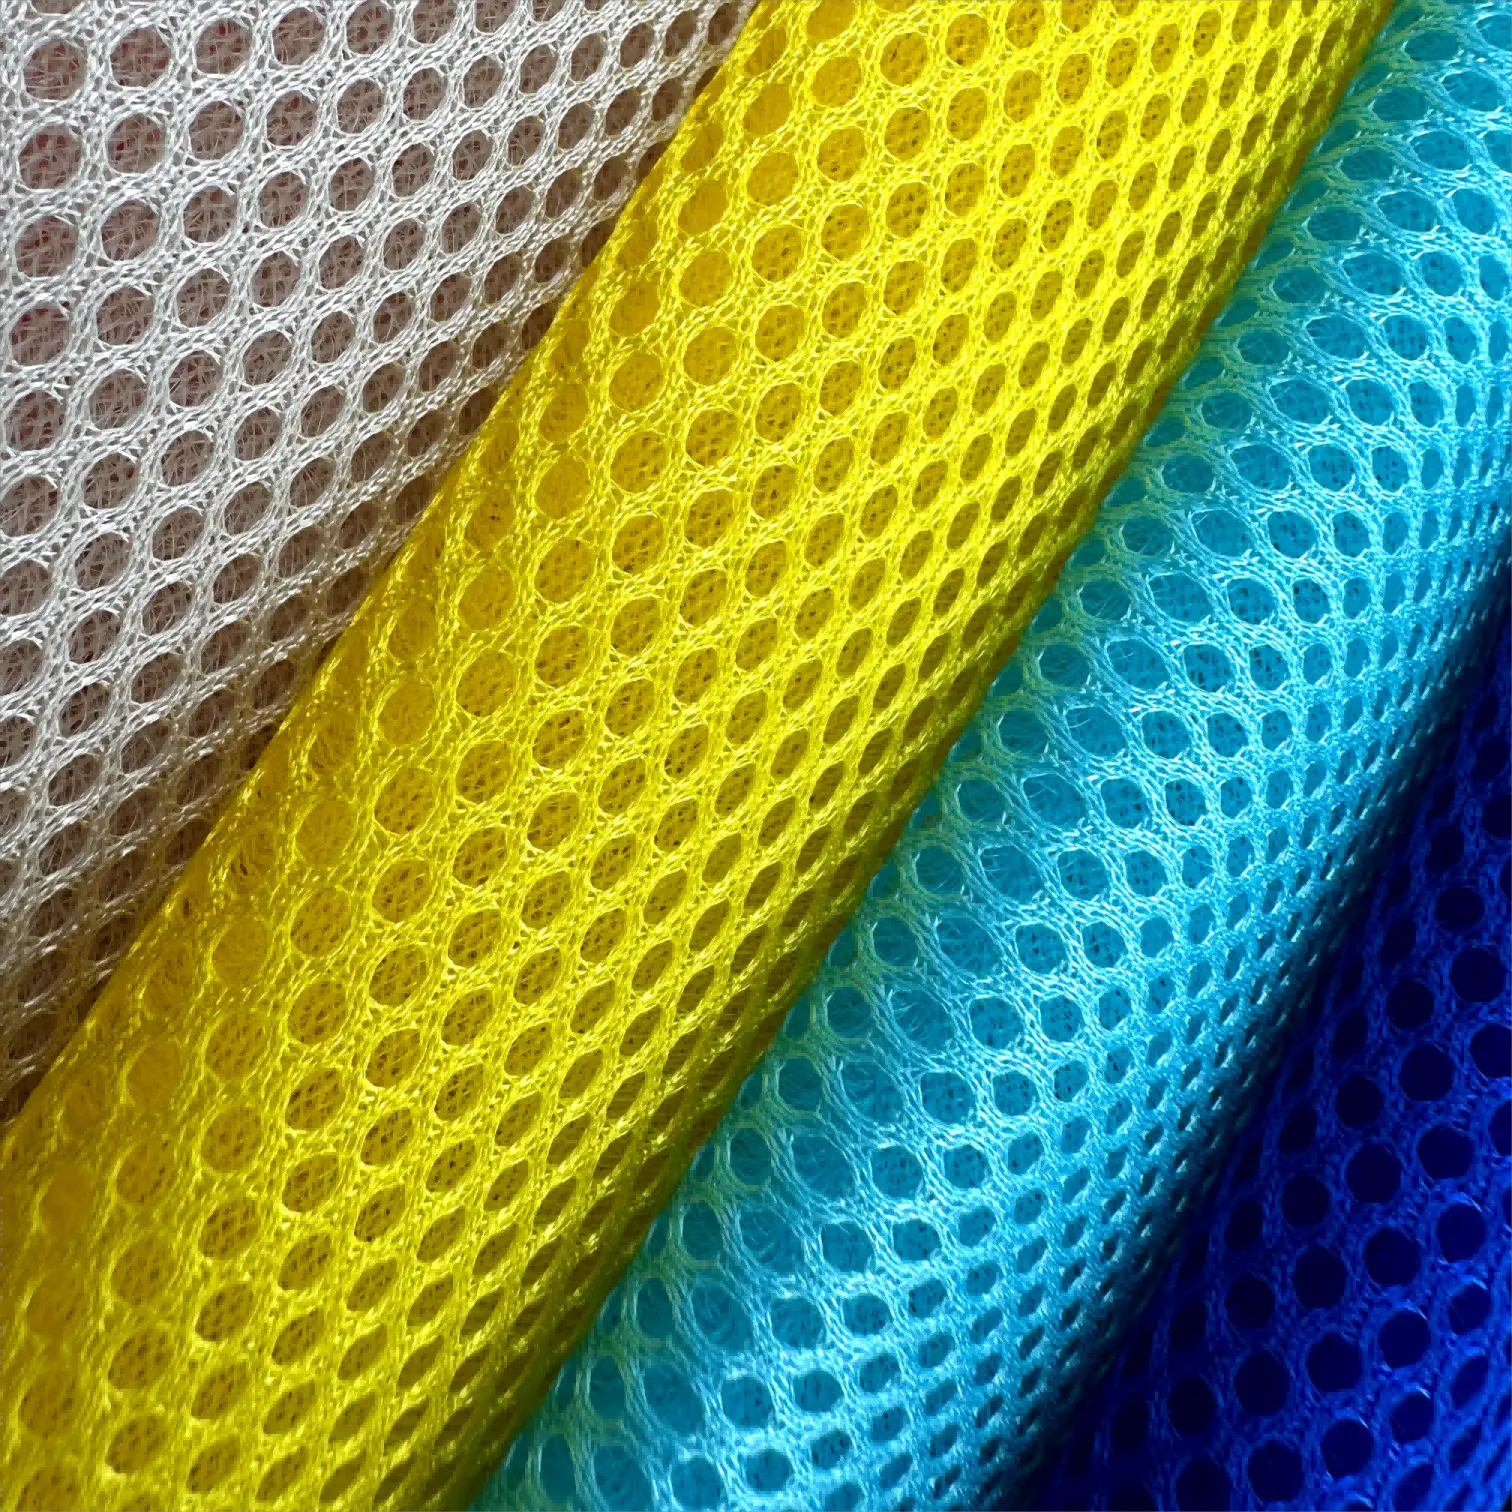 Sepatu olahraga jaring serat mikro kain jala nilon rajut berpendar kain jaring udara rajut 3D heksagonal